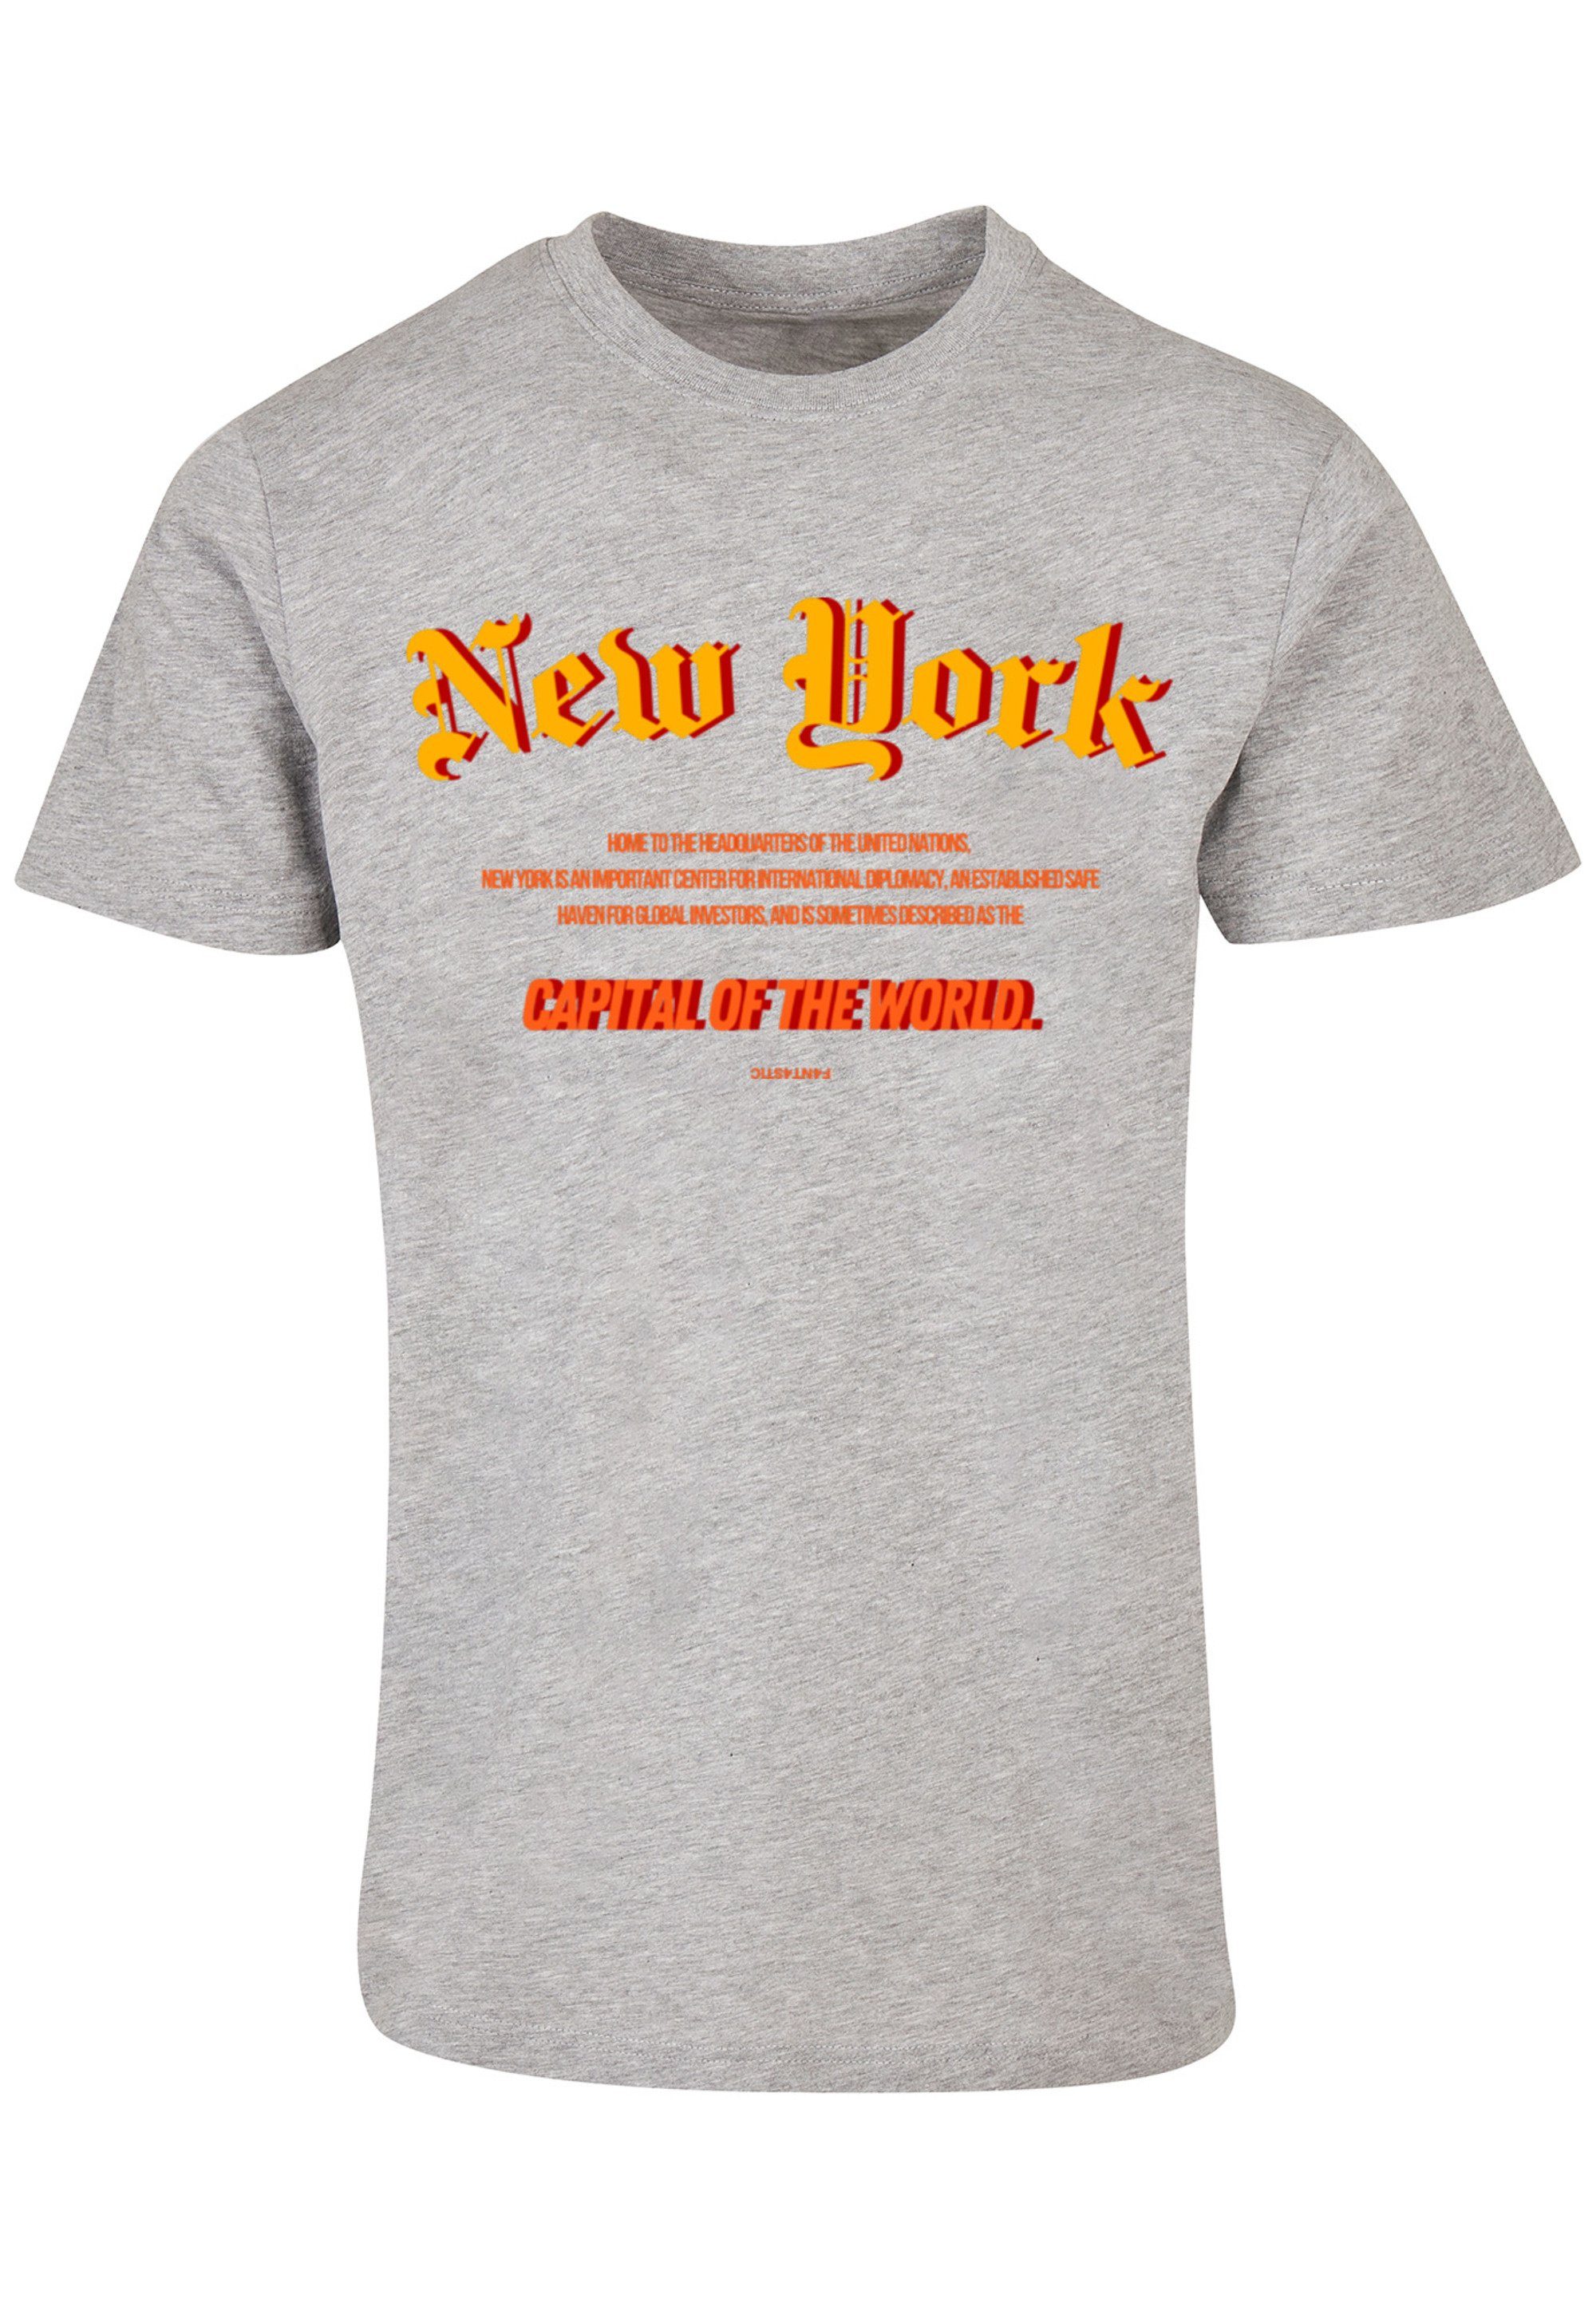 F4NT4STIC T-Shirt New Print TEE York grey UNISEX heather